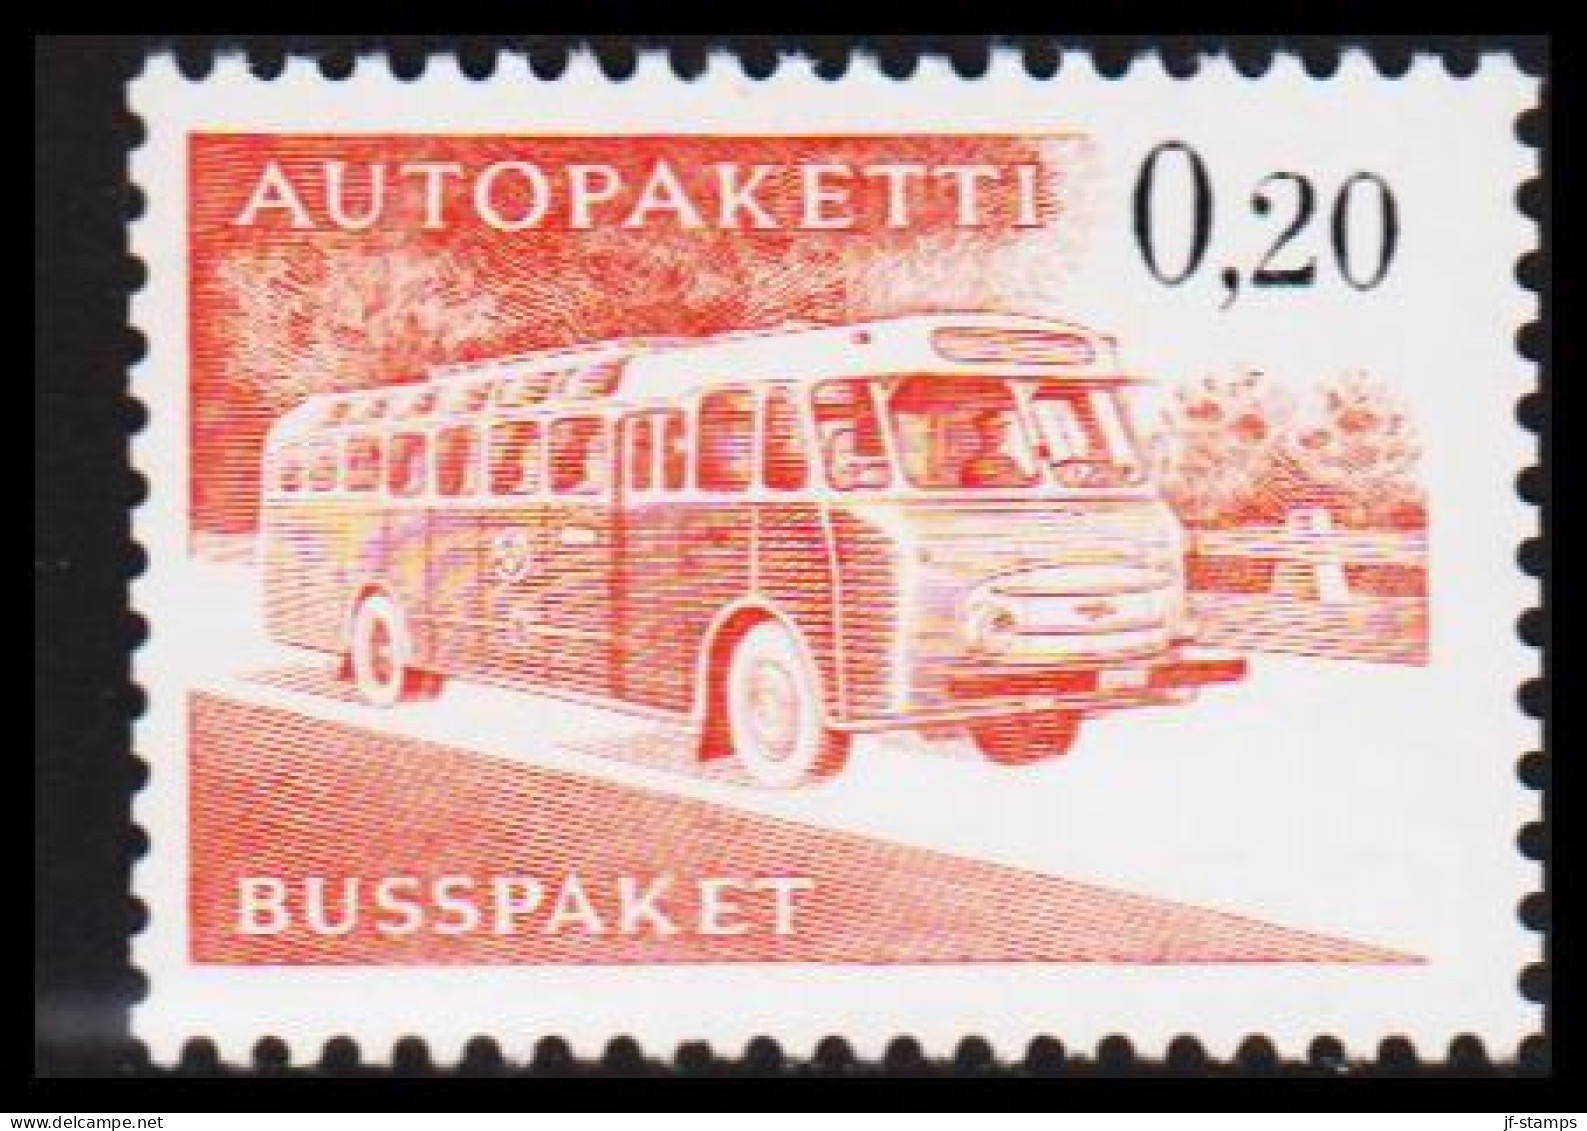 1963-1980. FINLAND. Mail Bus. 0,20 Mk. AUTOPAKETTI - BUSSPAKET Never Hinged. Lumogen. Yell... (Michel AP 11y) - JF535628 - Envios Por Bus